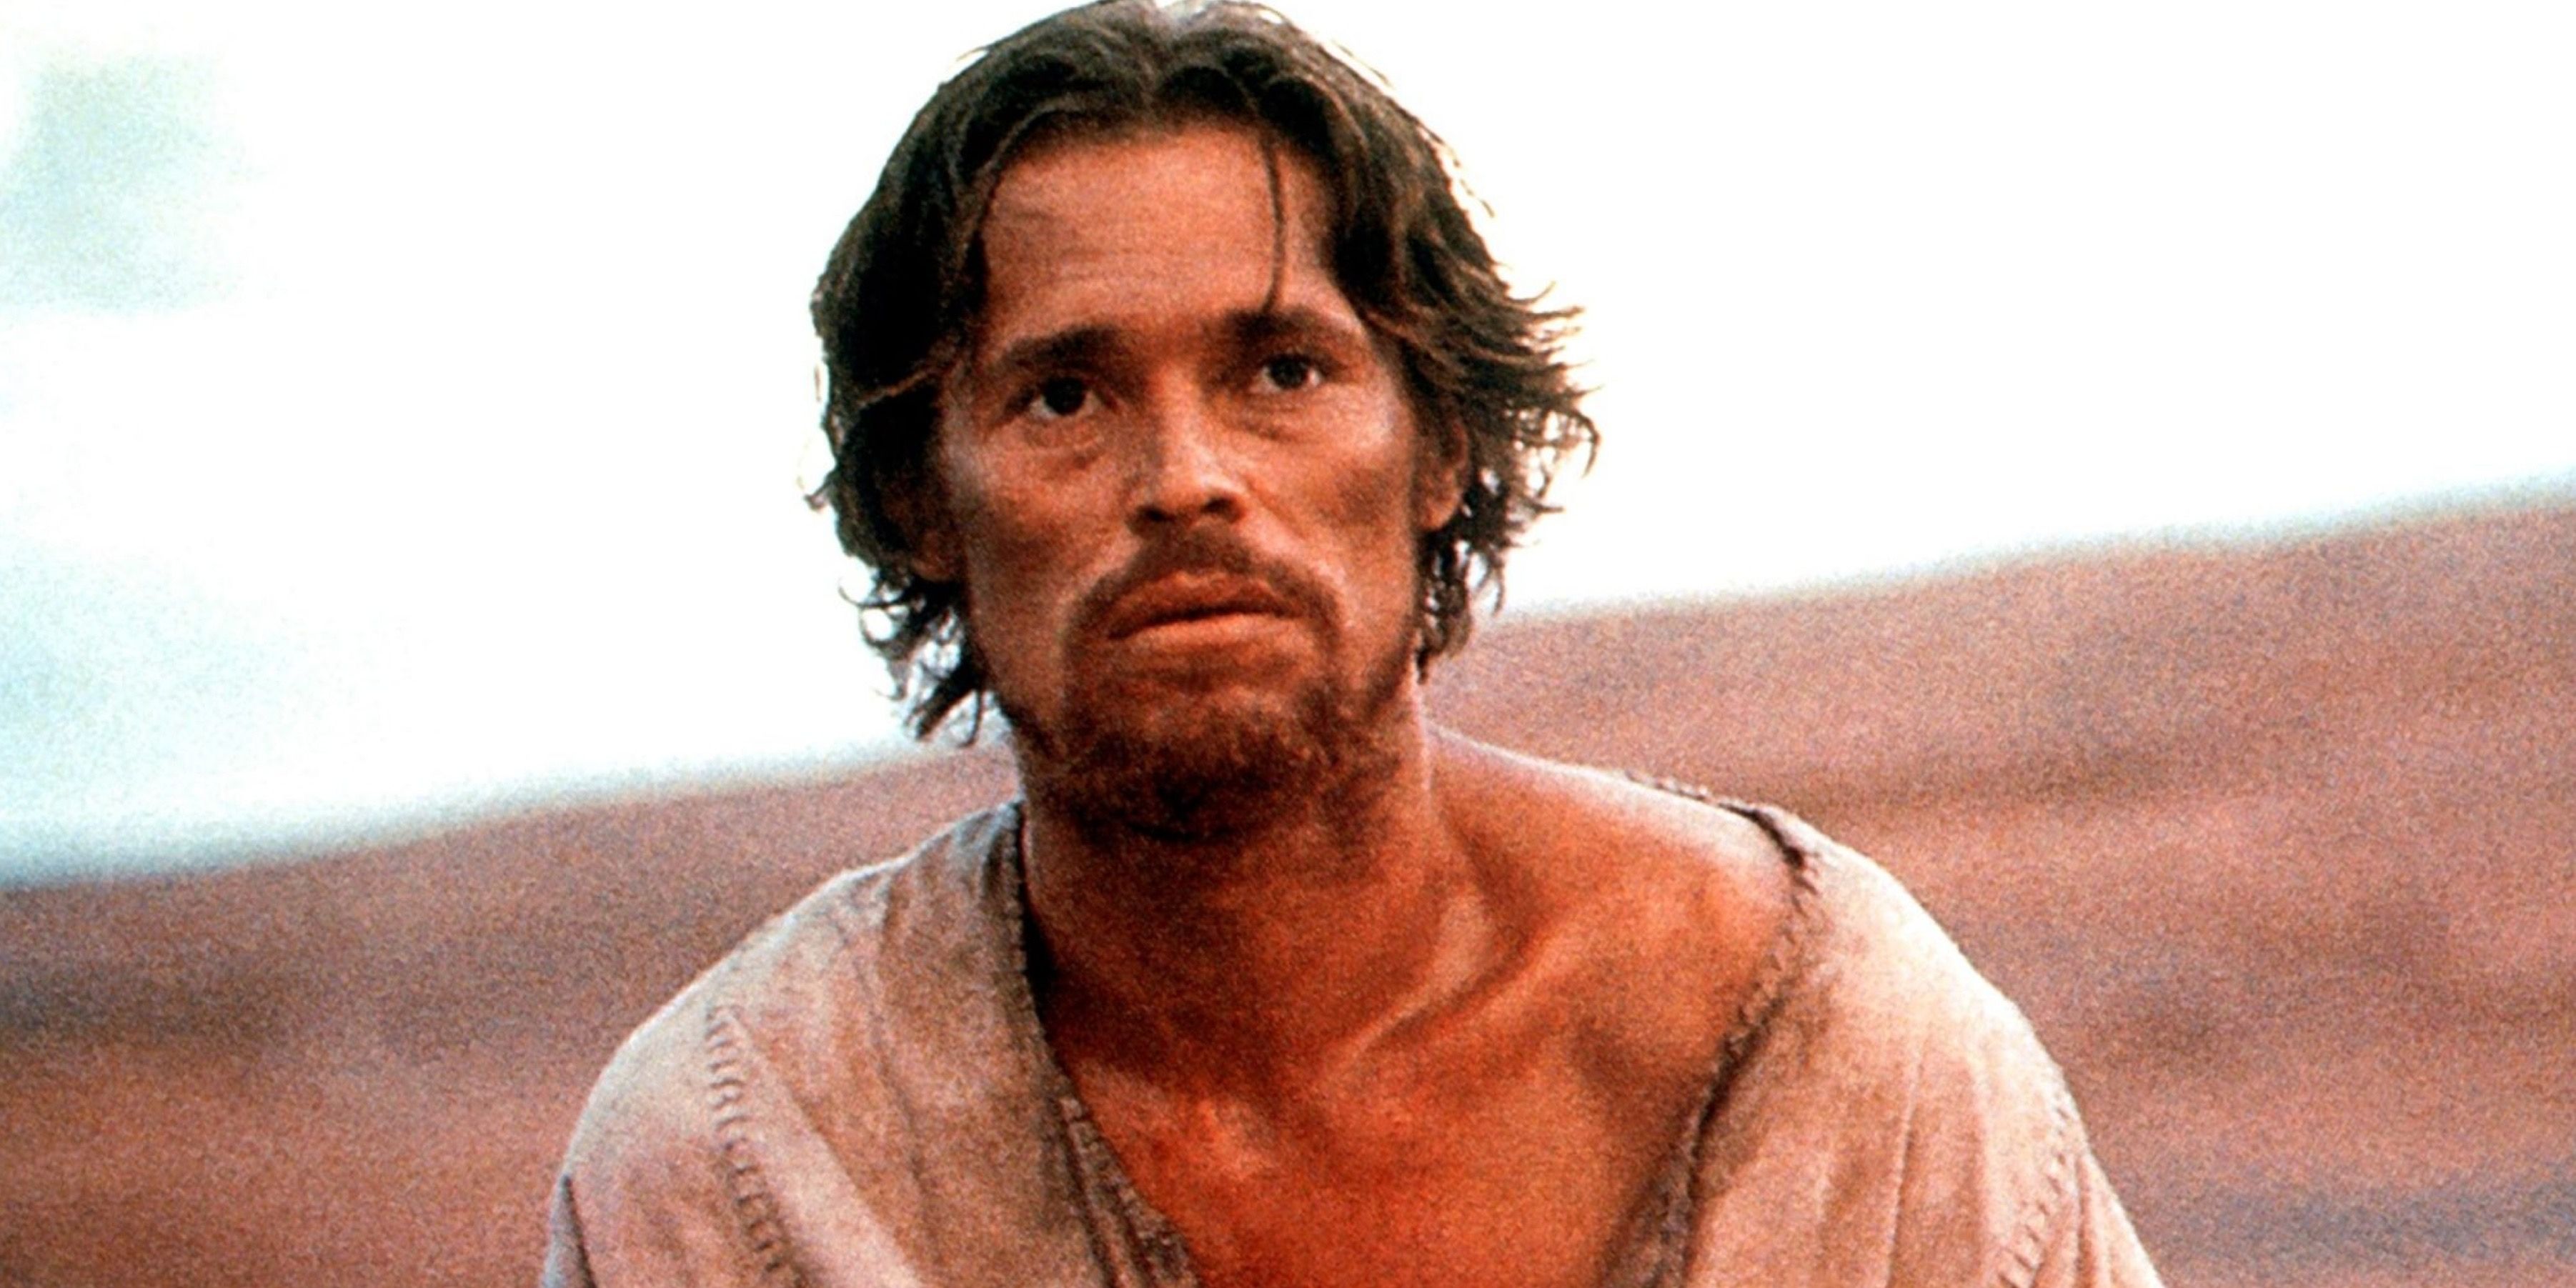 Willem Dafoe as Jesus in The Last Temptation of Christ